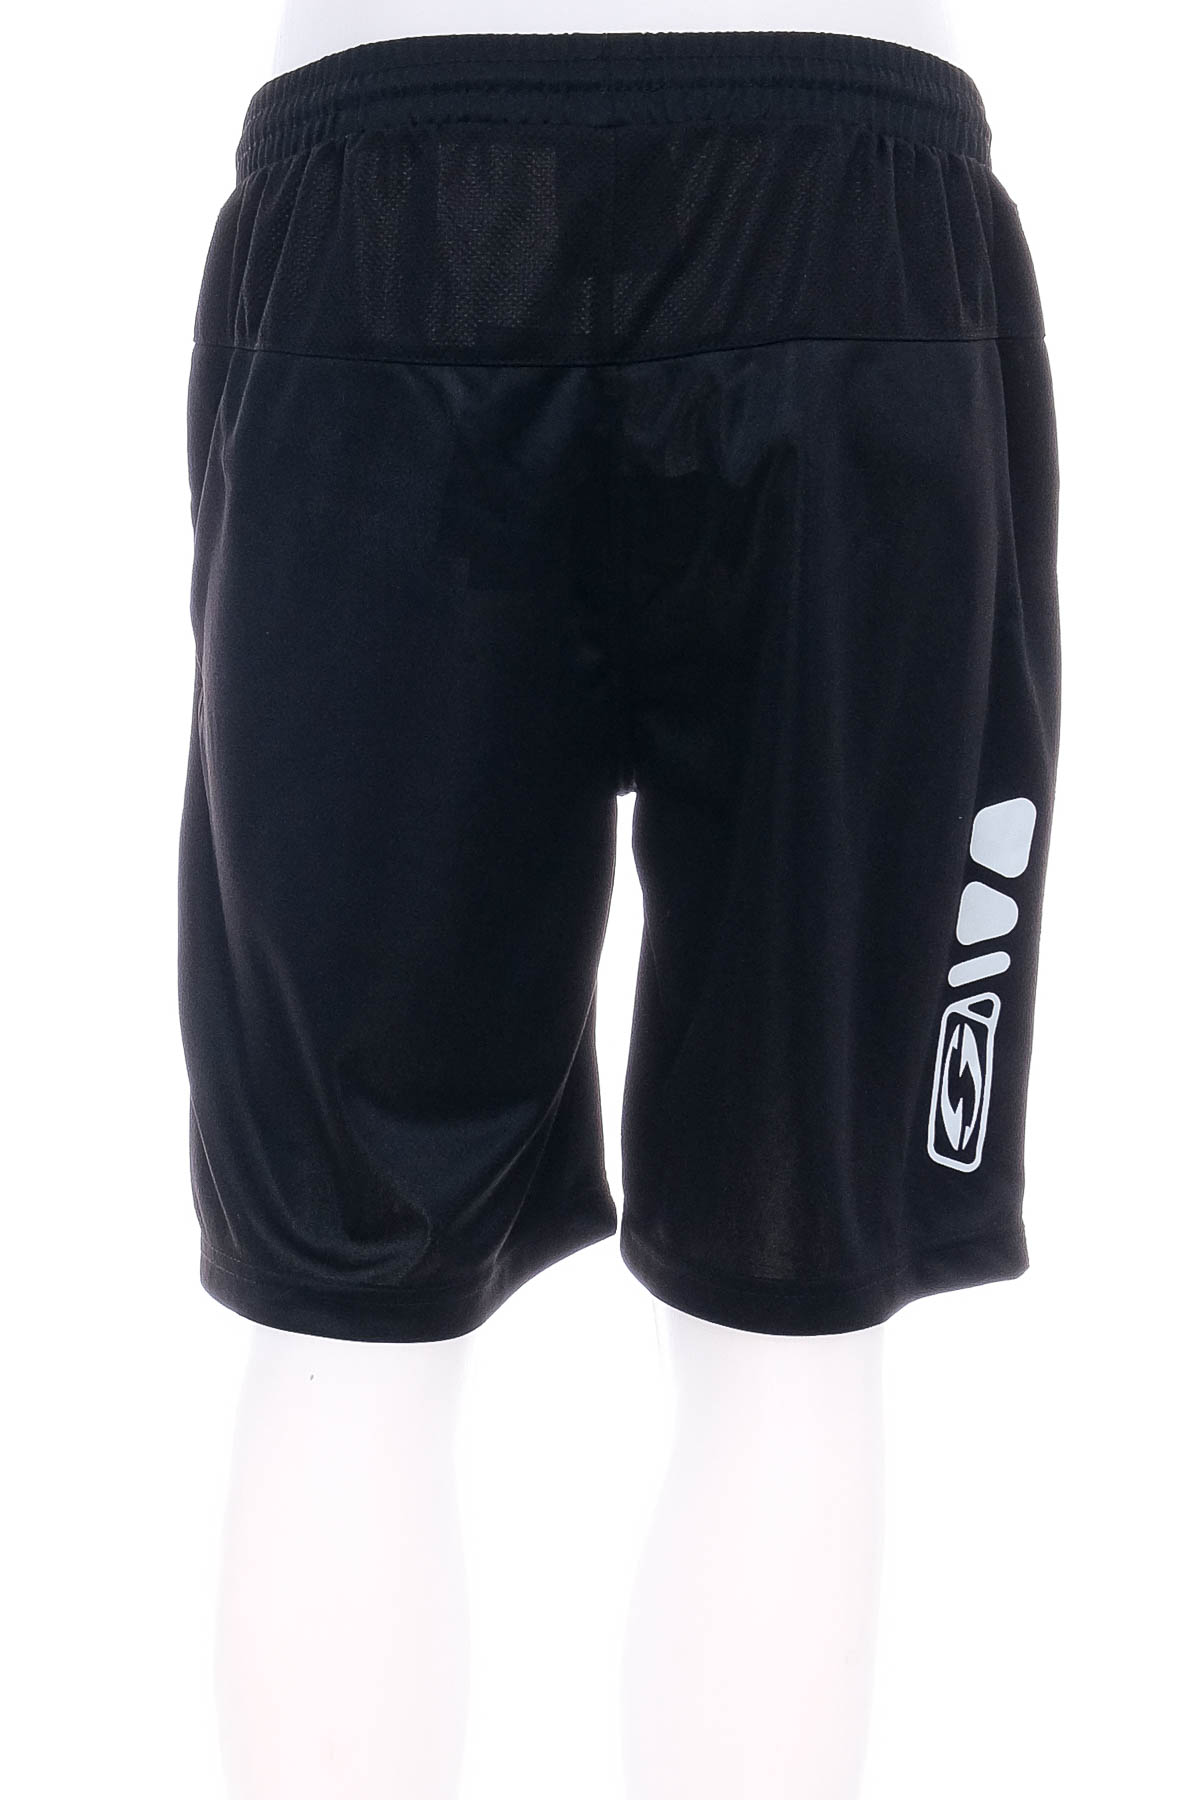 Men's shorts - Saller - 1